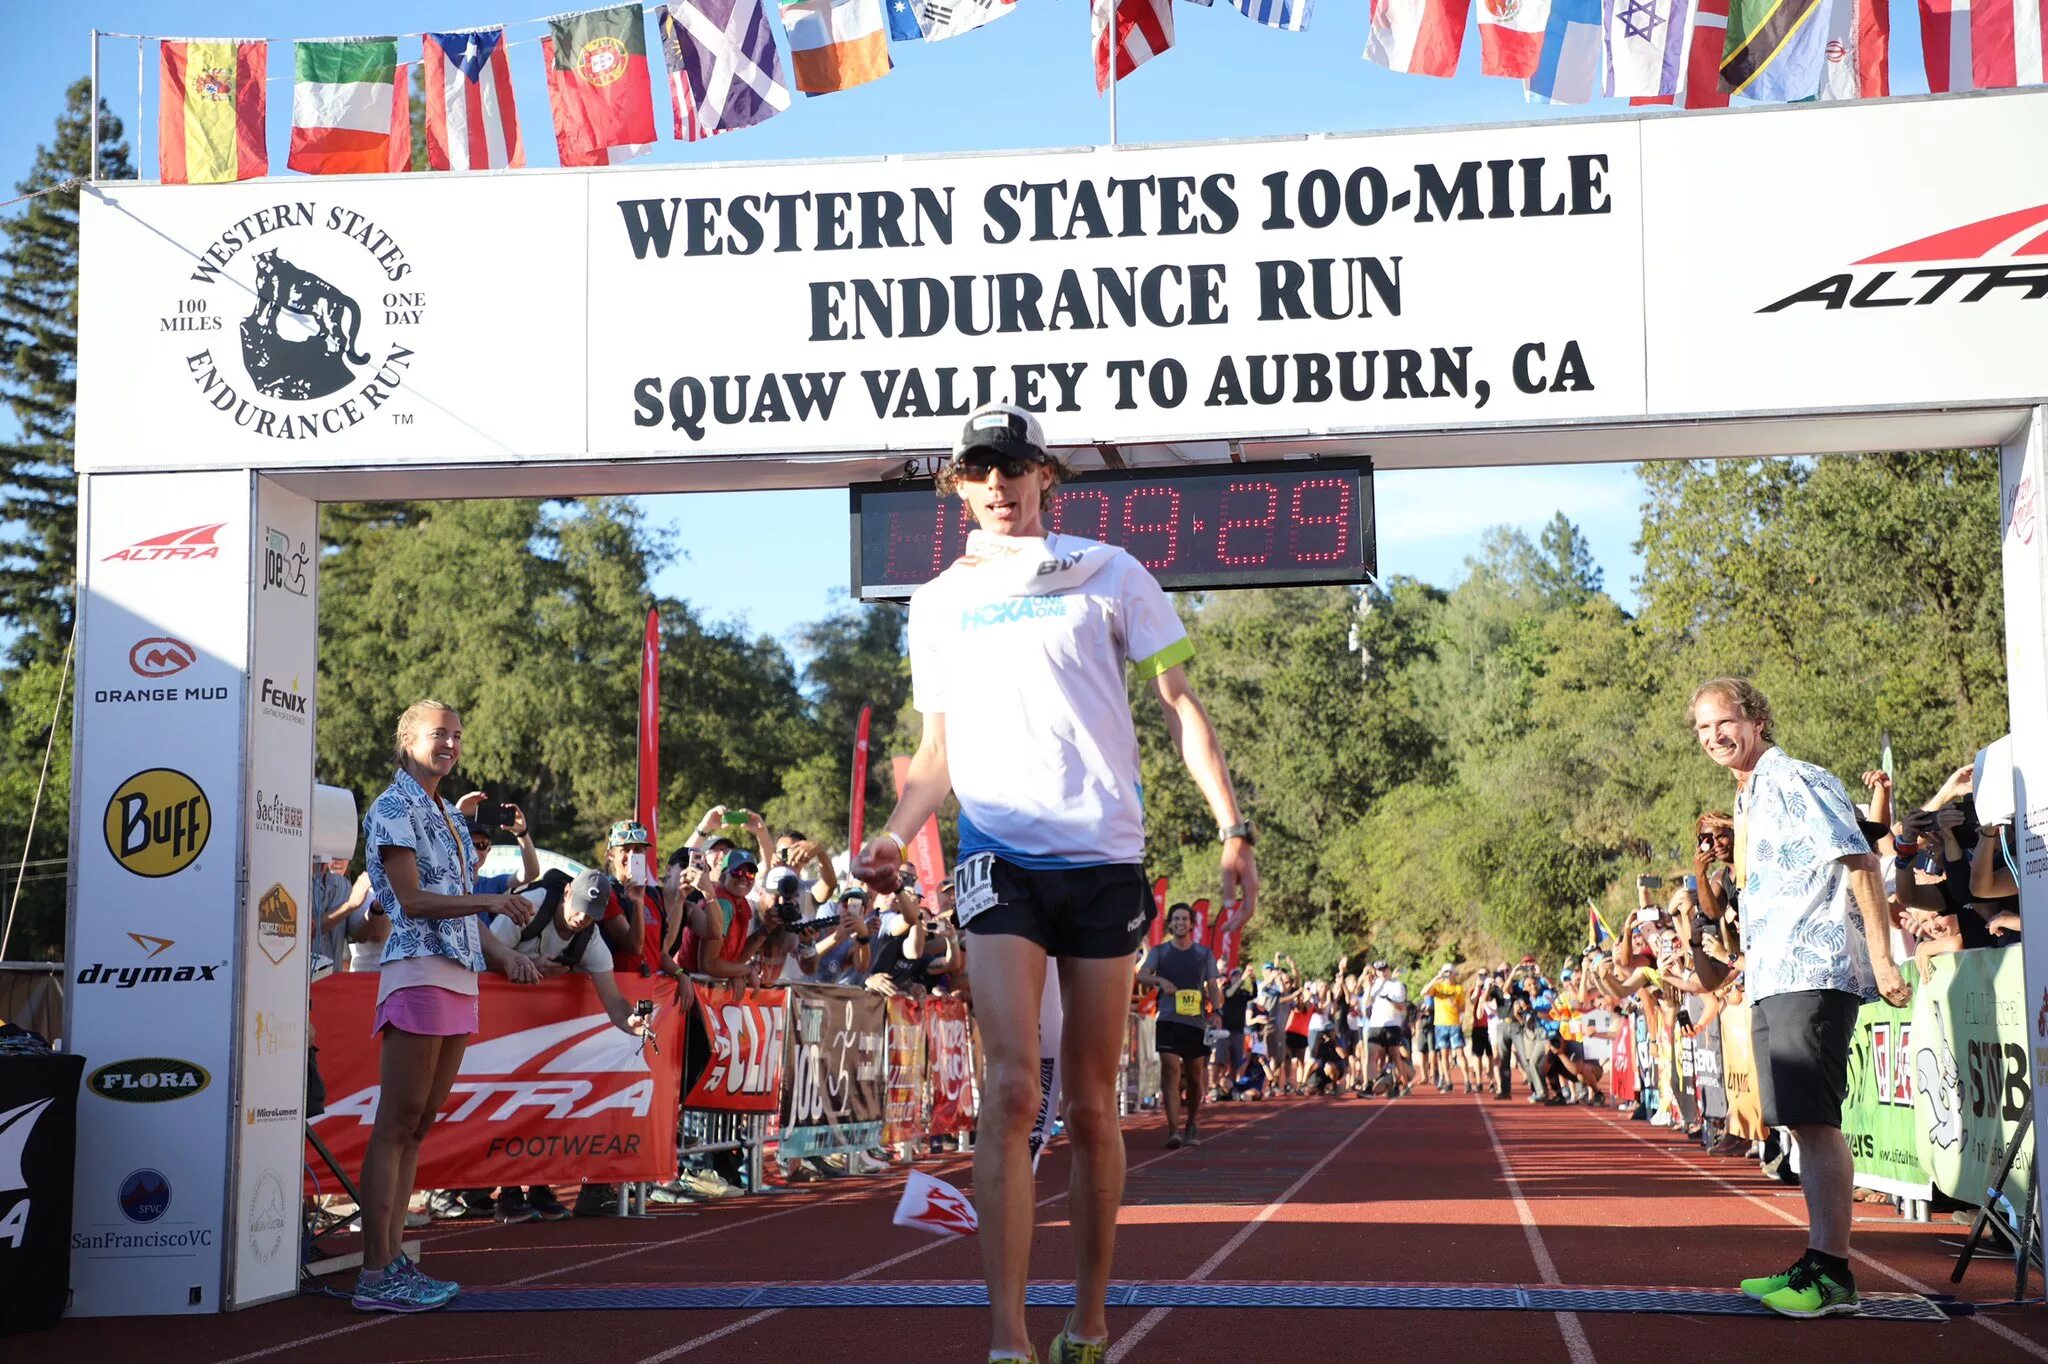 The Western States ® 100-Mile Endurance Run. Western States 100-Mile. The Western States. Western states